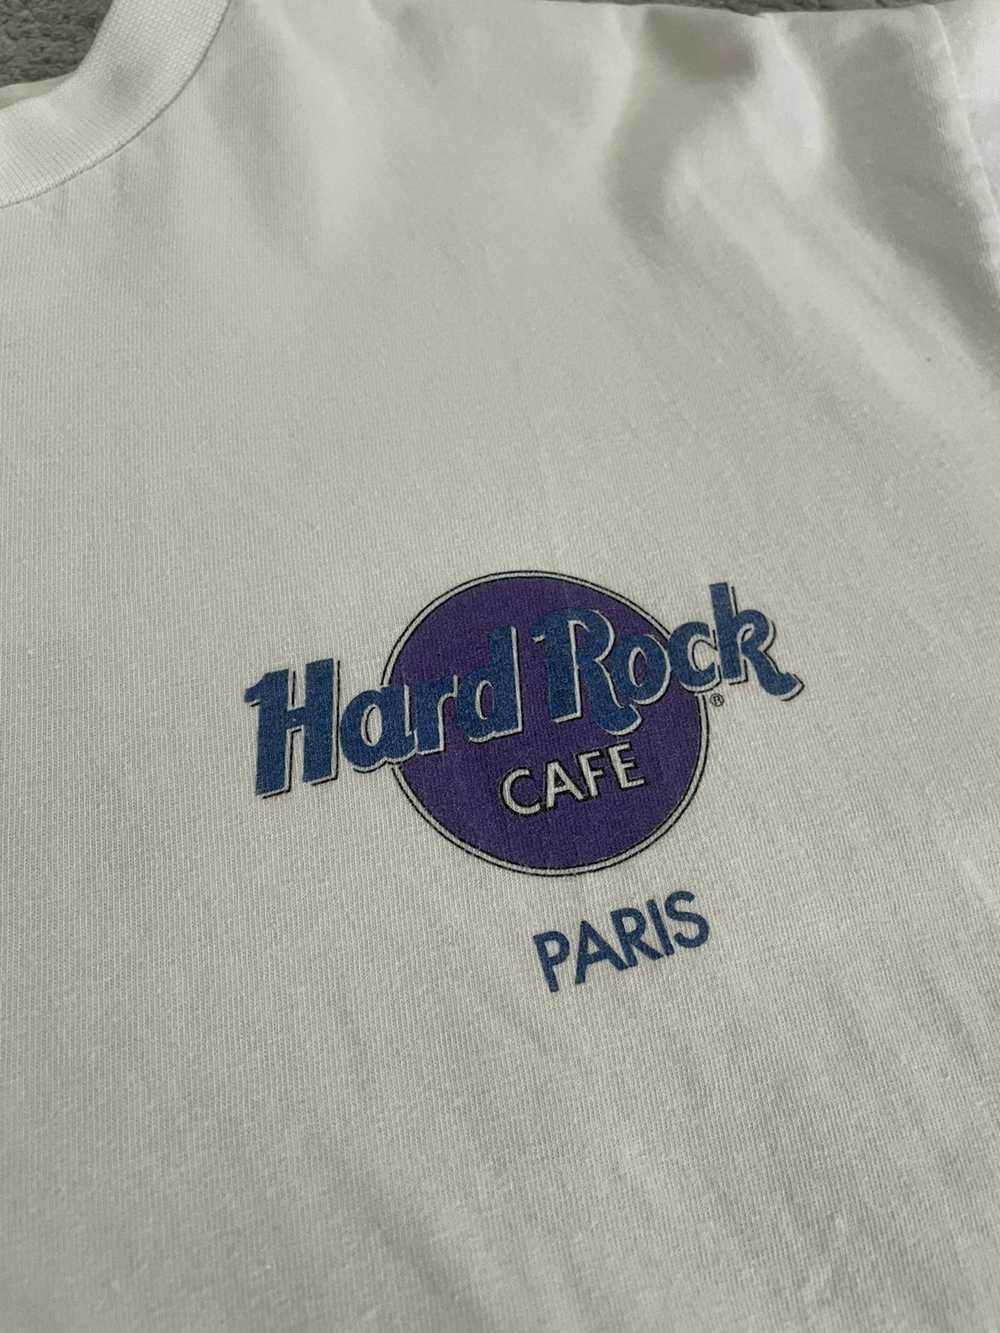 Hard Rock Cafe Hard Rock Cafe Paris - image 4